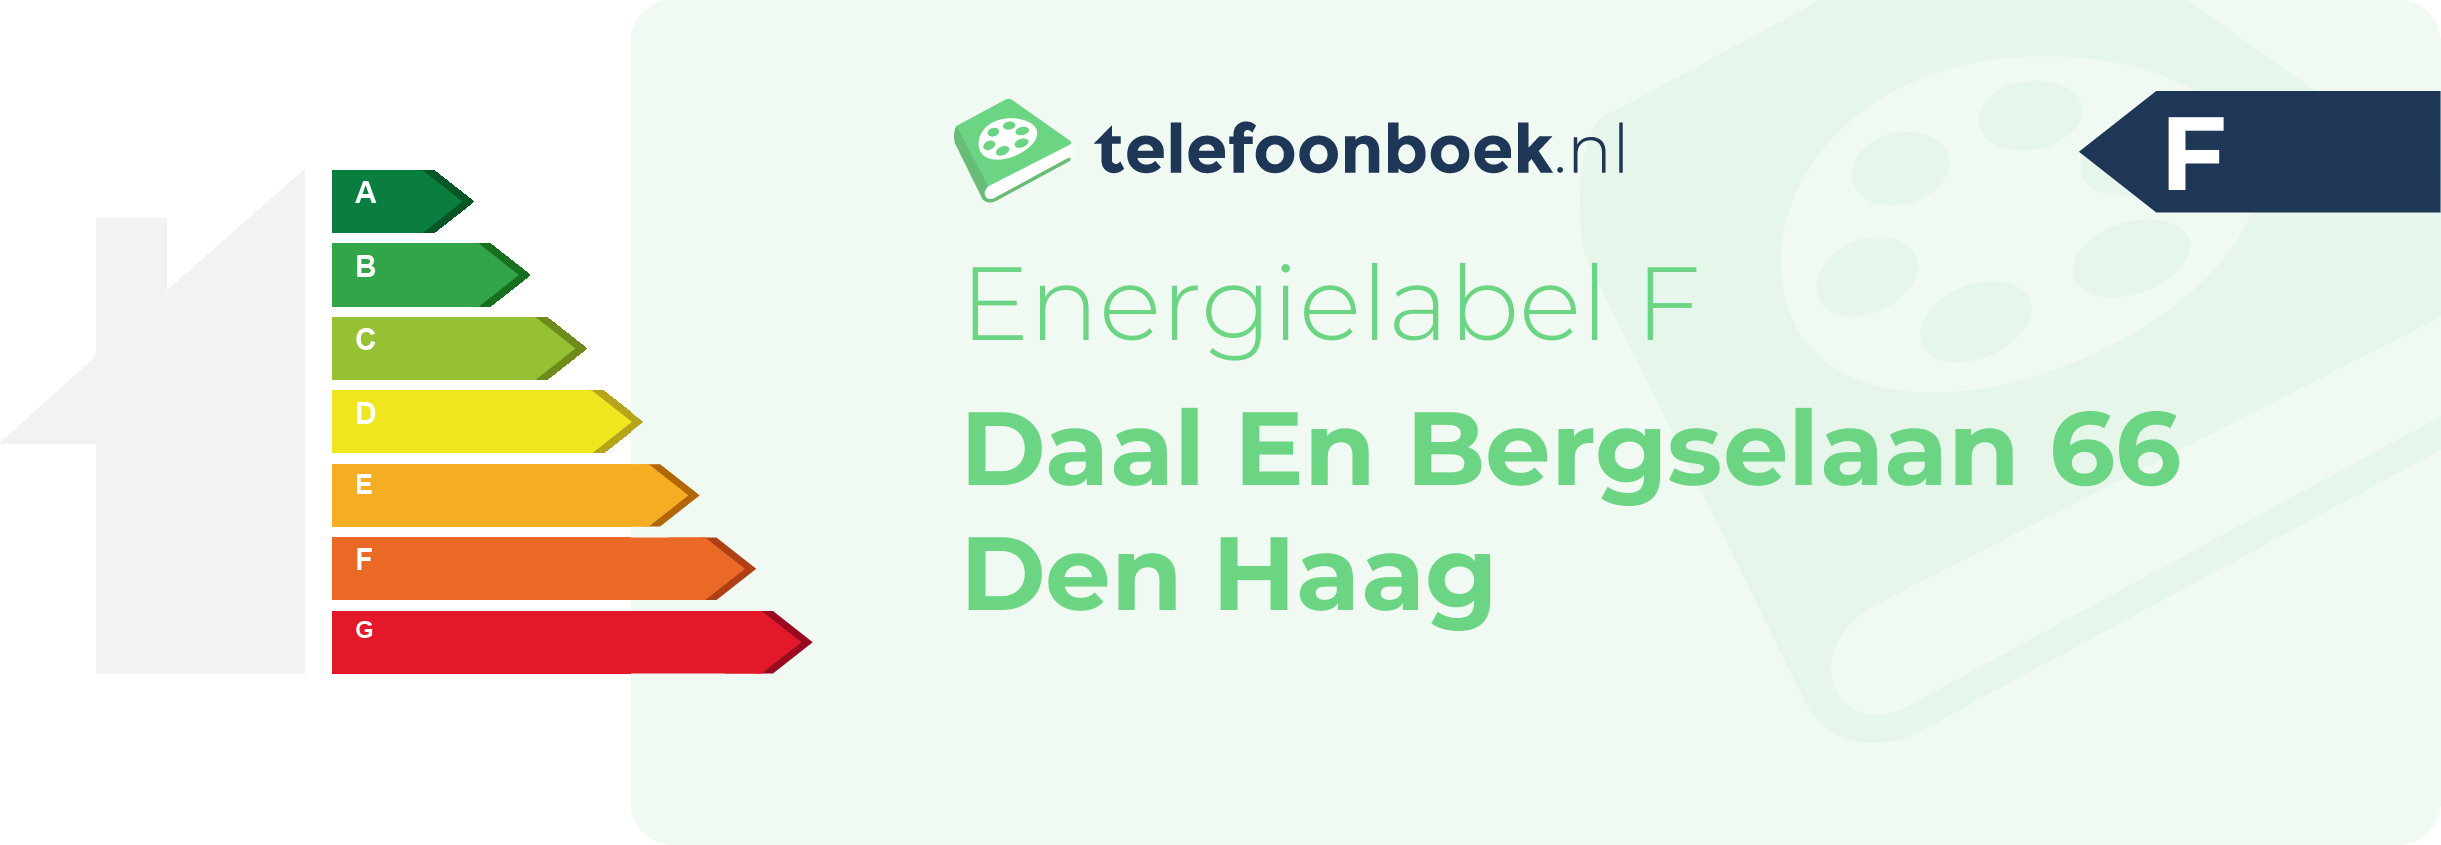 Energielabel Daal En Bergselaan 66 Den Haag